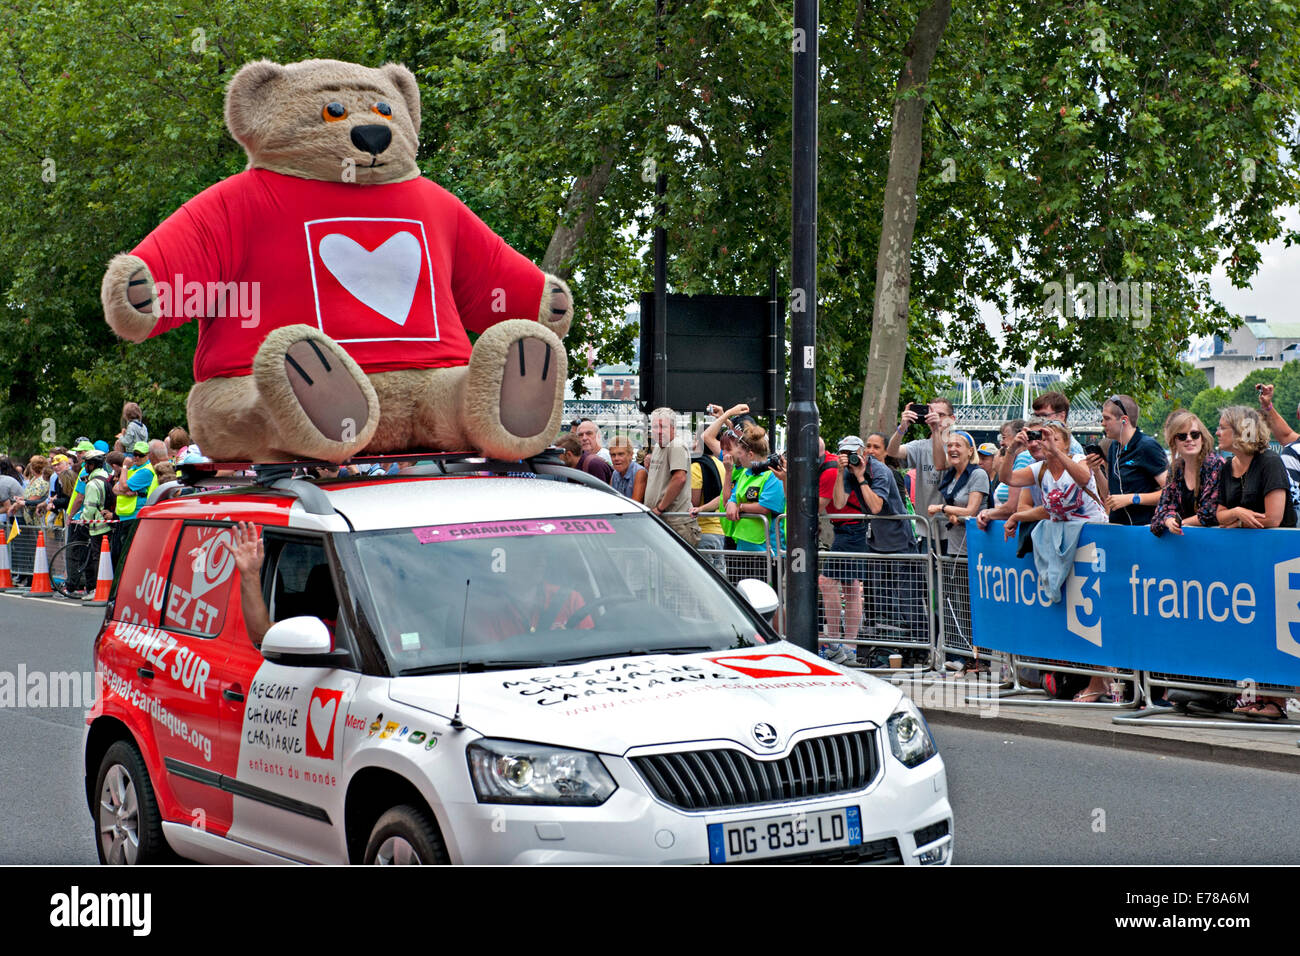 'Tour de France' 'publicity caravan'  during the 2014 Cycle Race in London Stock Photo